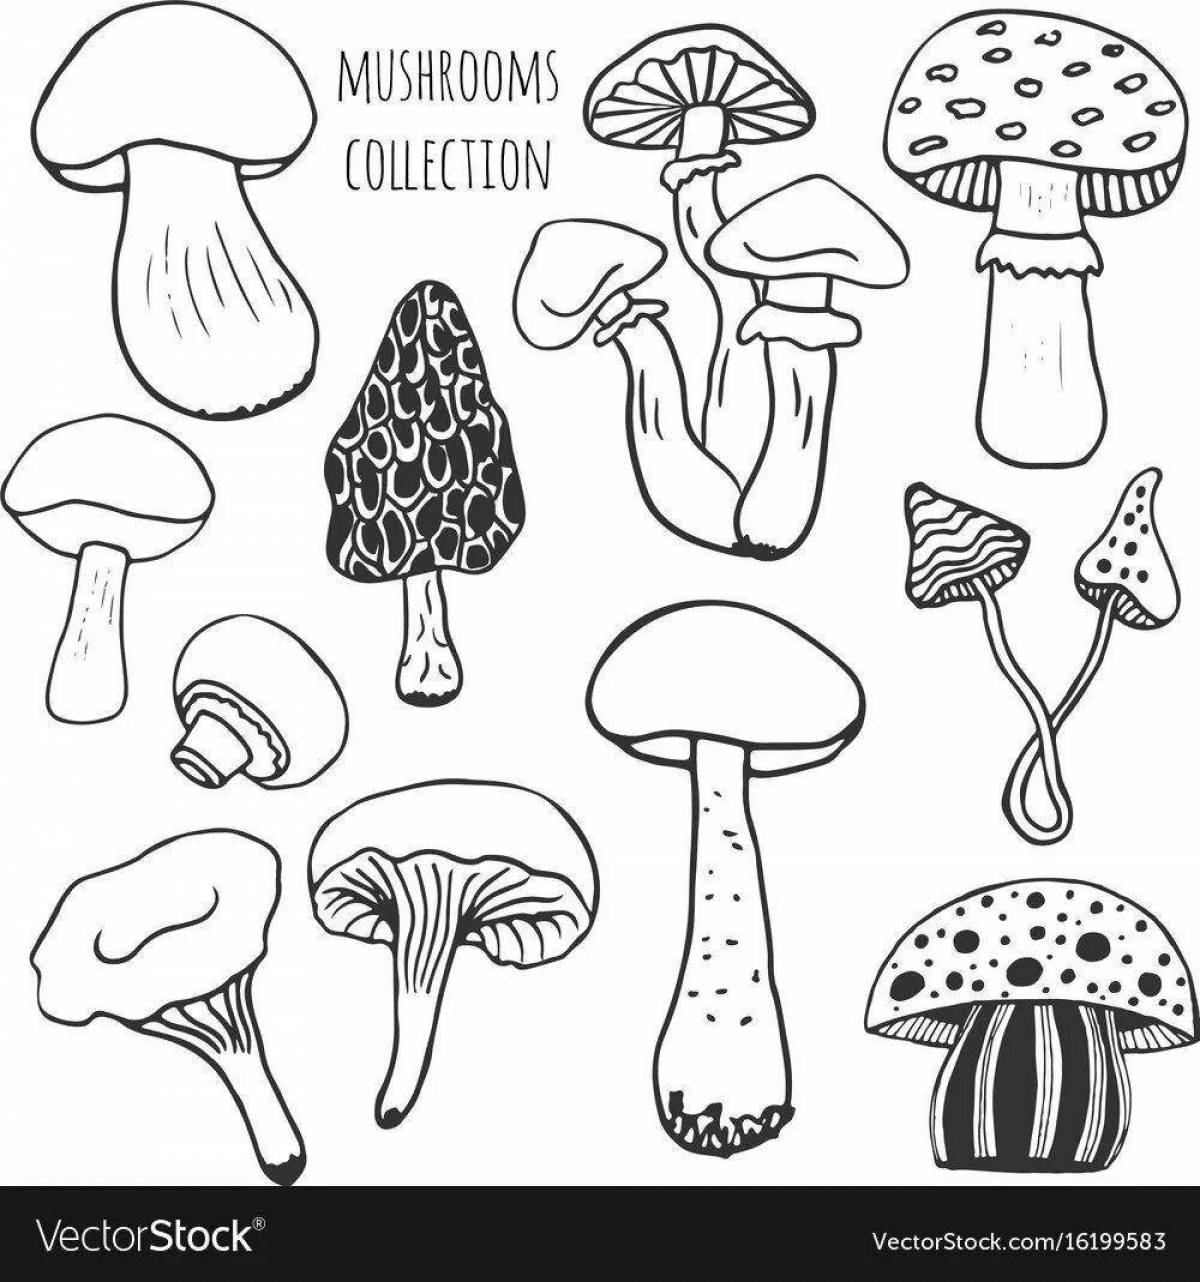 Gorgeous inedible mushrooms coloring book